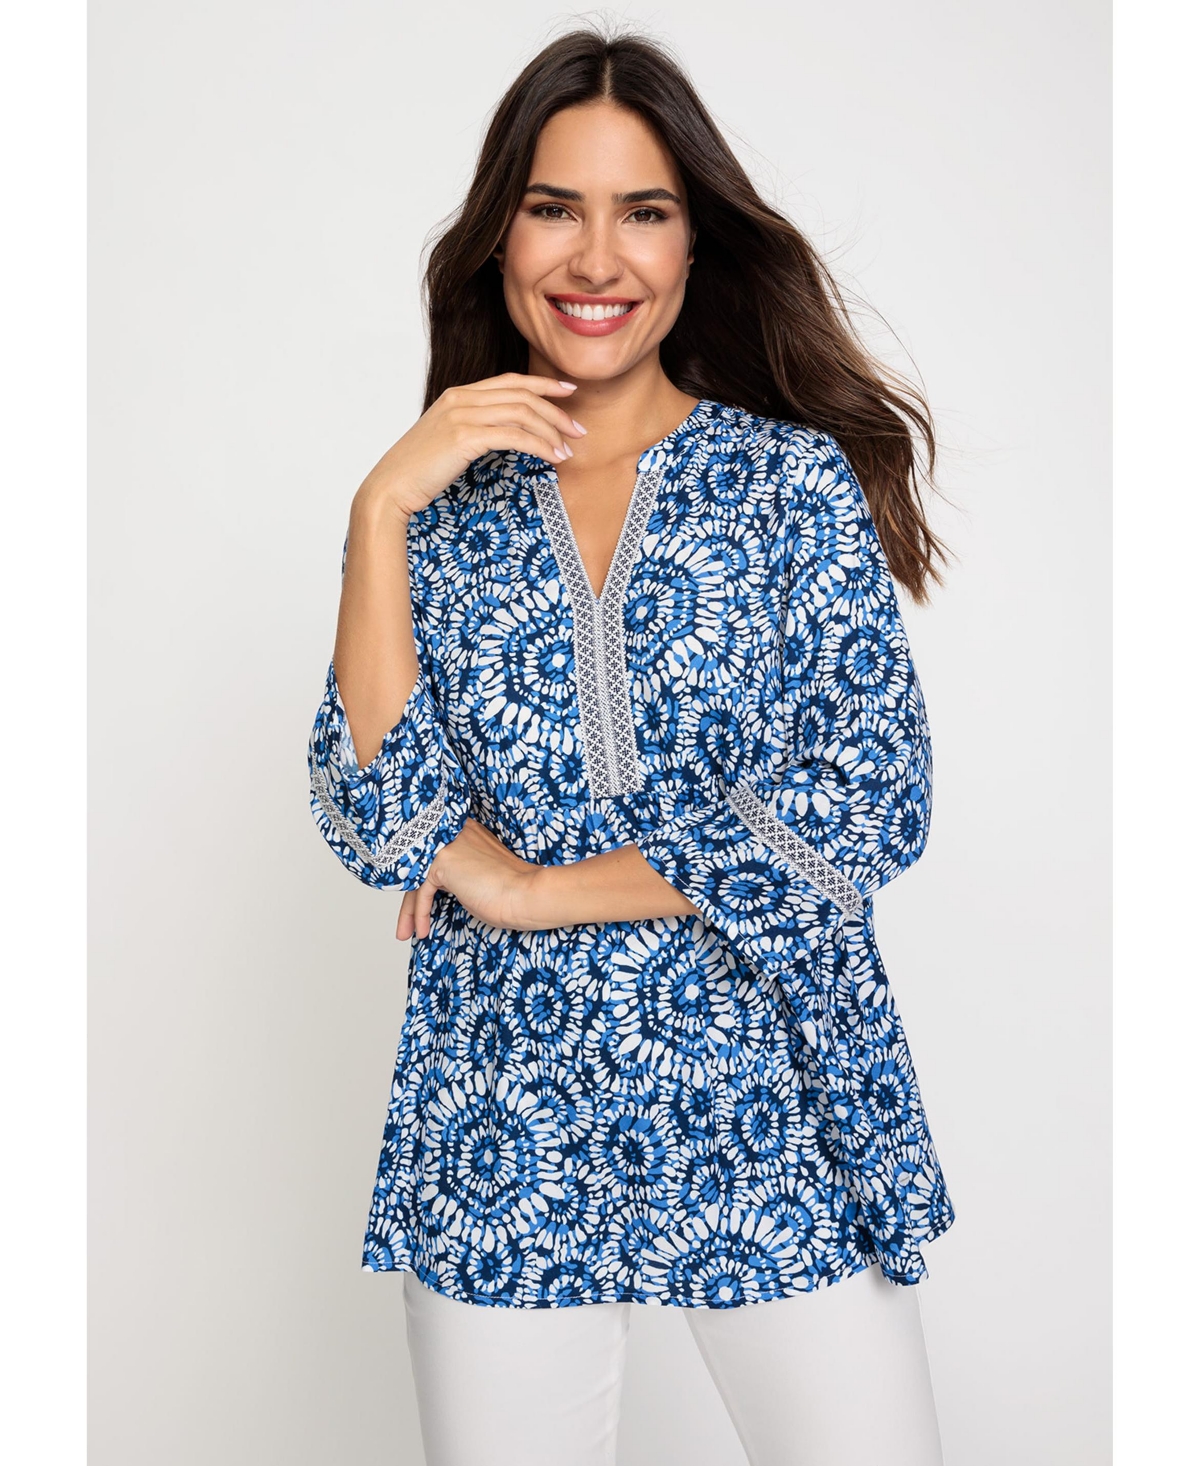 Women's 3/4 Sleeve Printed Tunic Blouse - Lapis blue